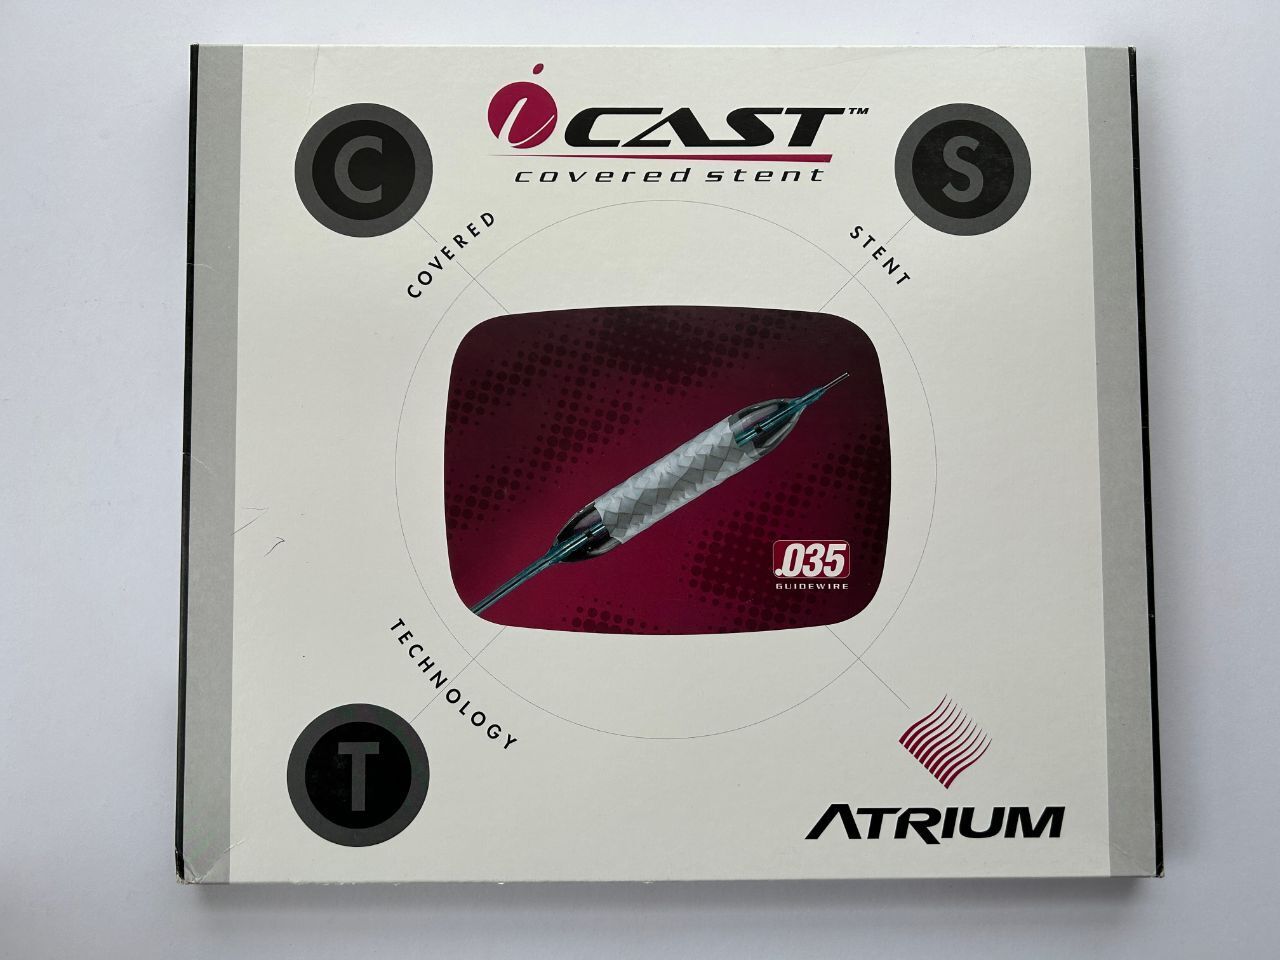 ATRIUM CAST covered stent 5mm x 16mm x 120 cm REF: 85450 DATE: 2014/03